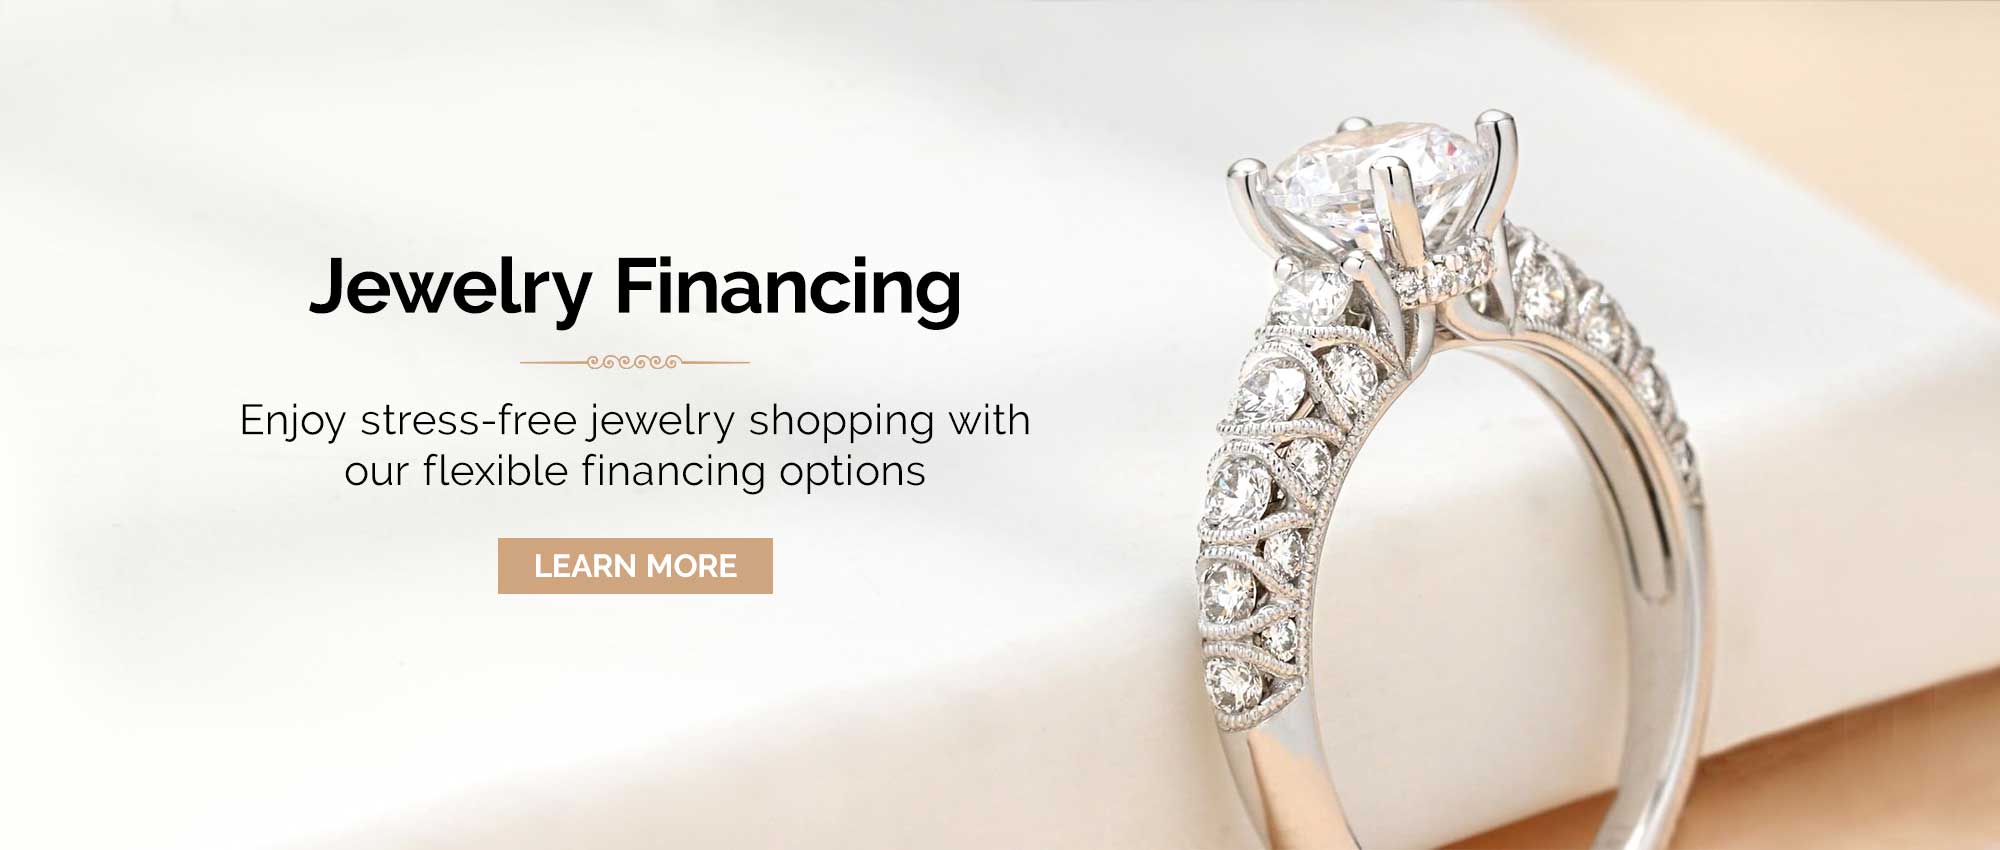 Jewelry Financing in Reston At Midtown Jewelers